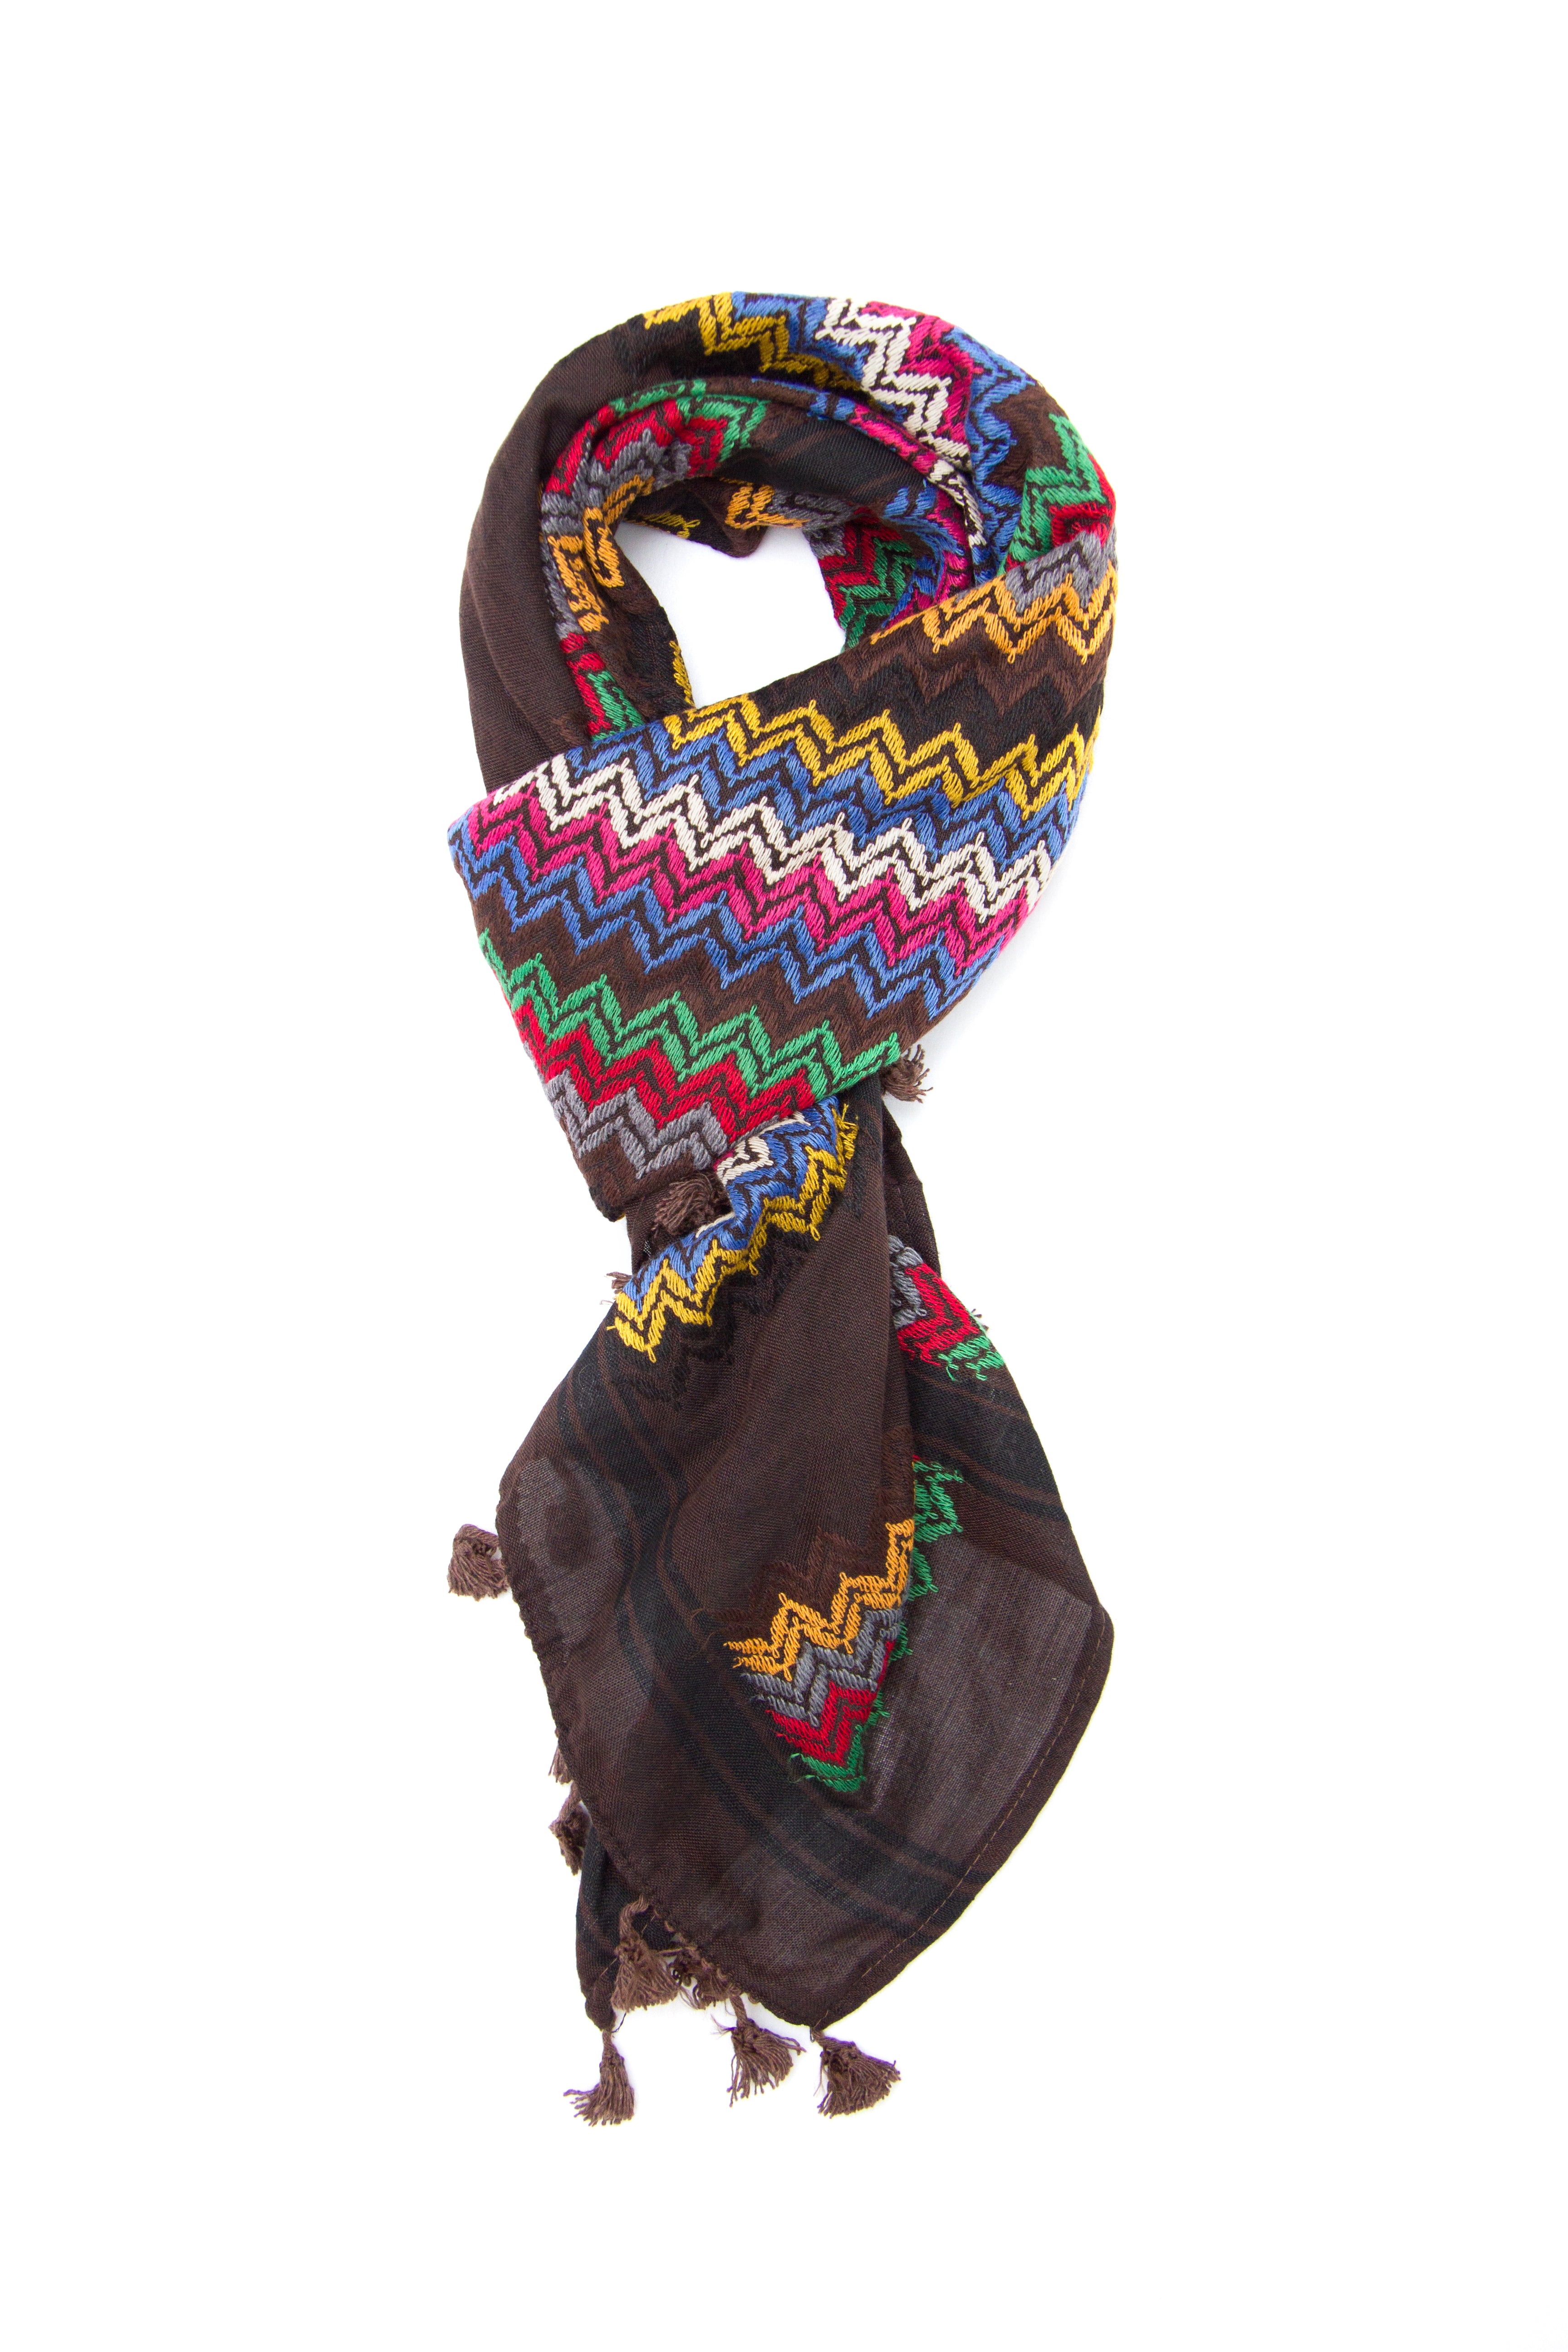 Hirbawi Brown chocolate kufiya fashion Palestinian scarf